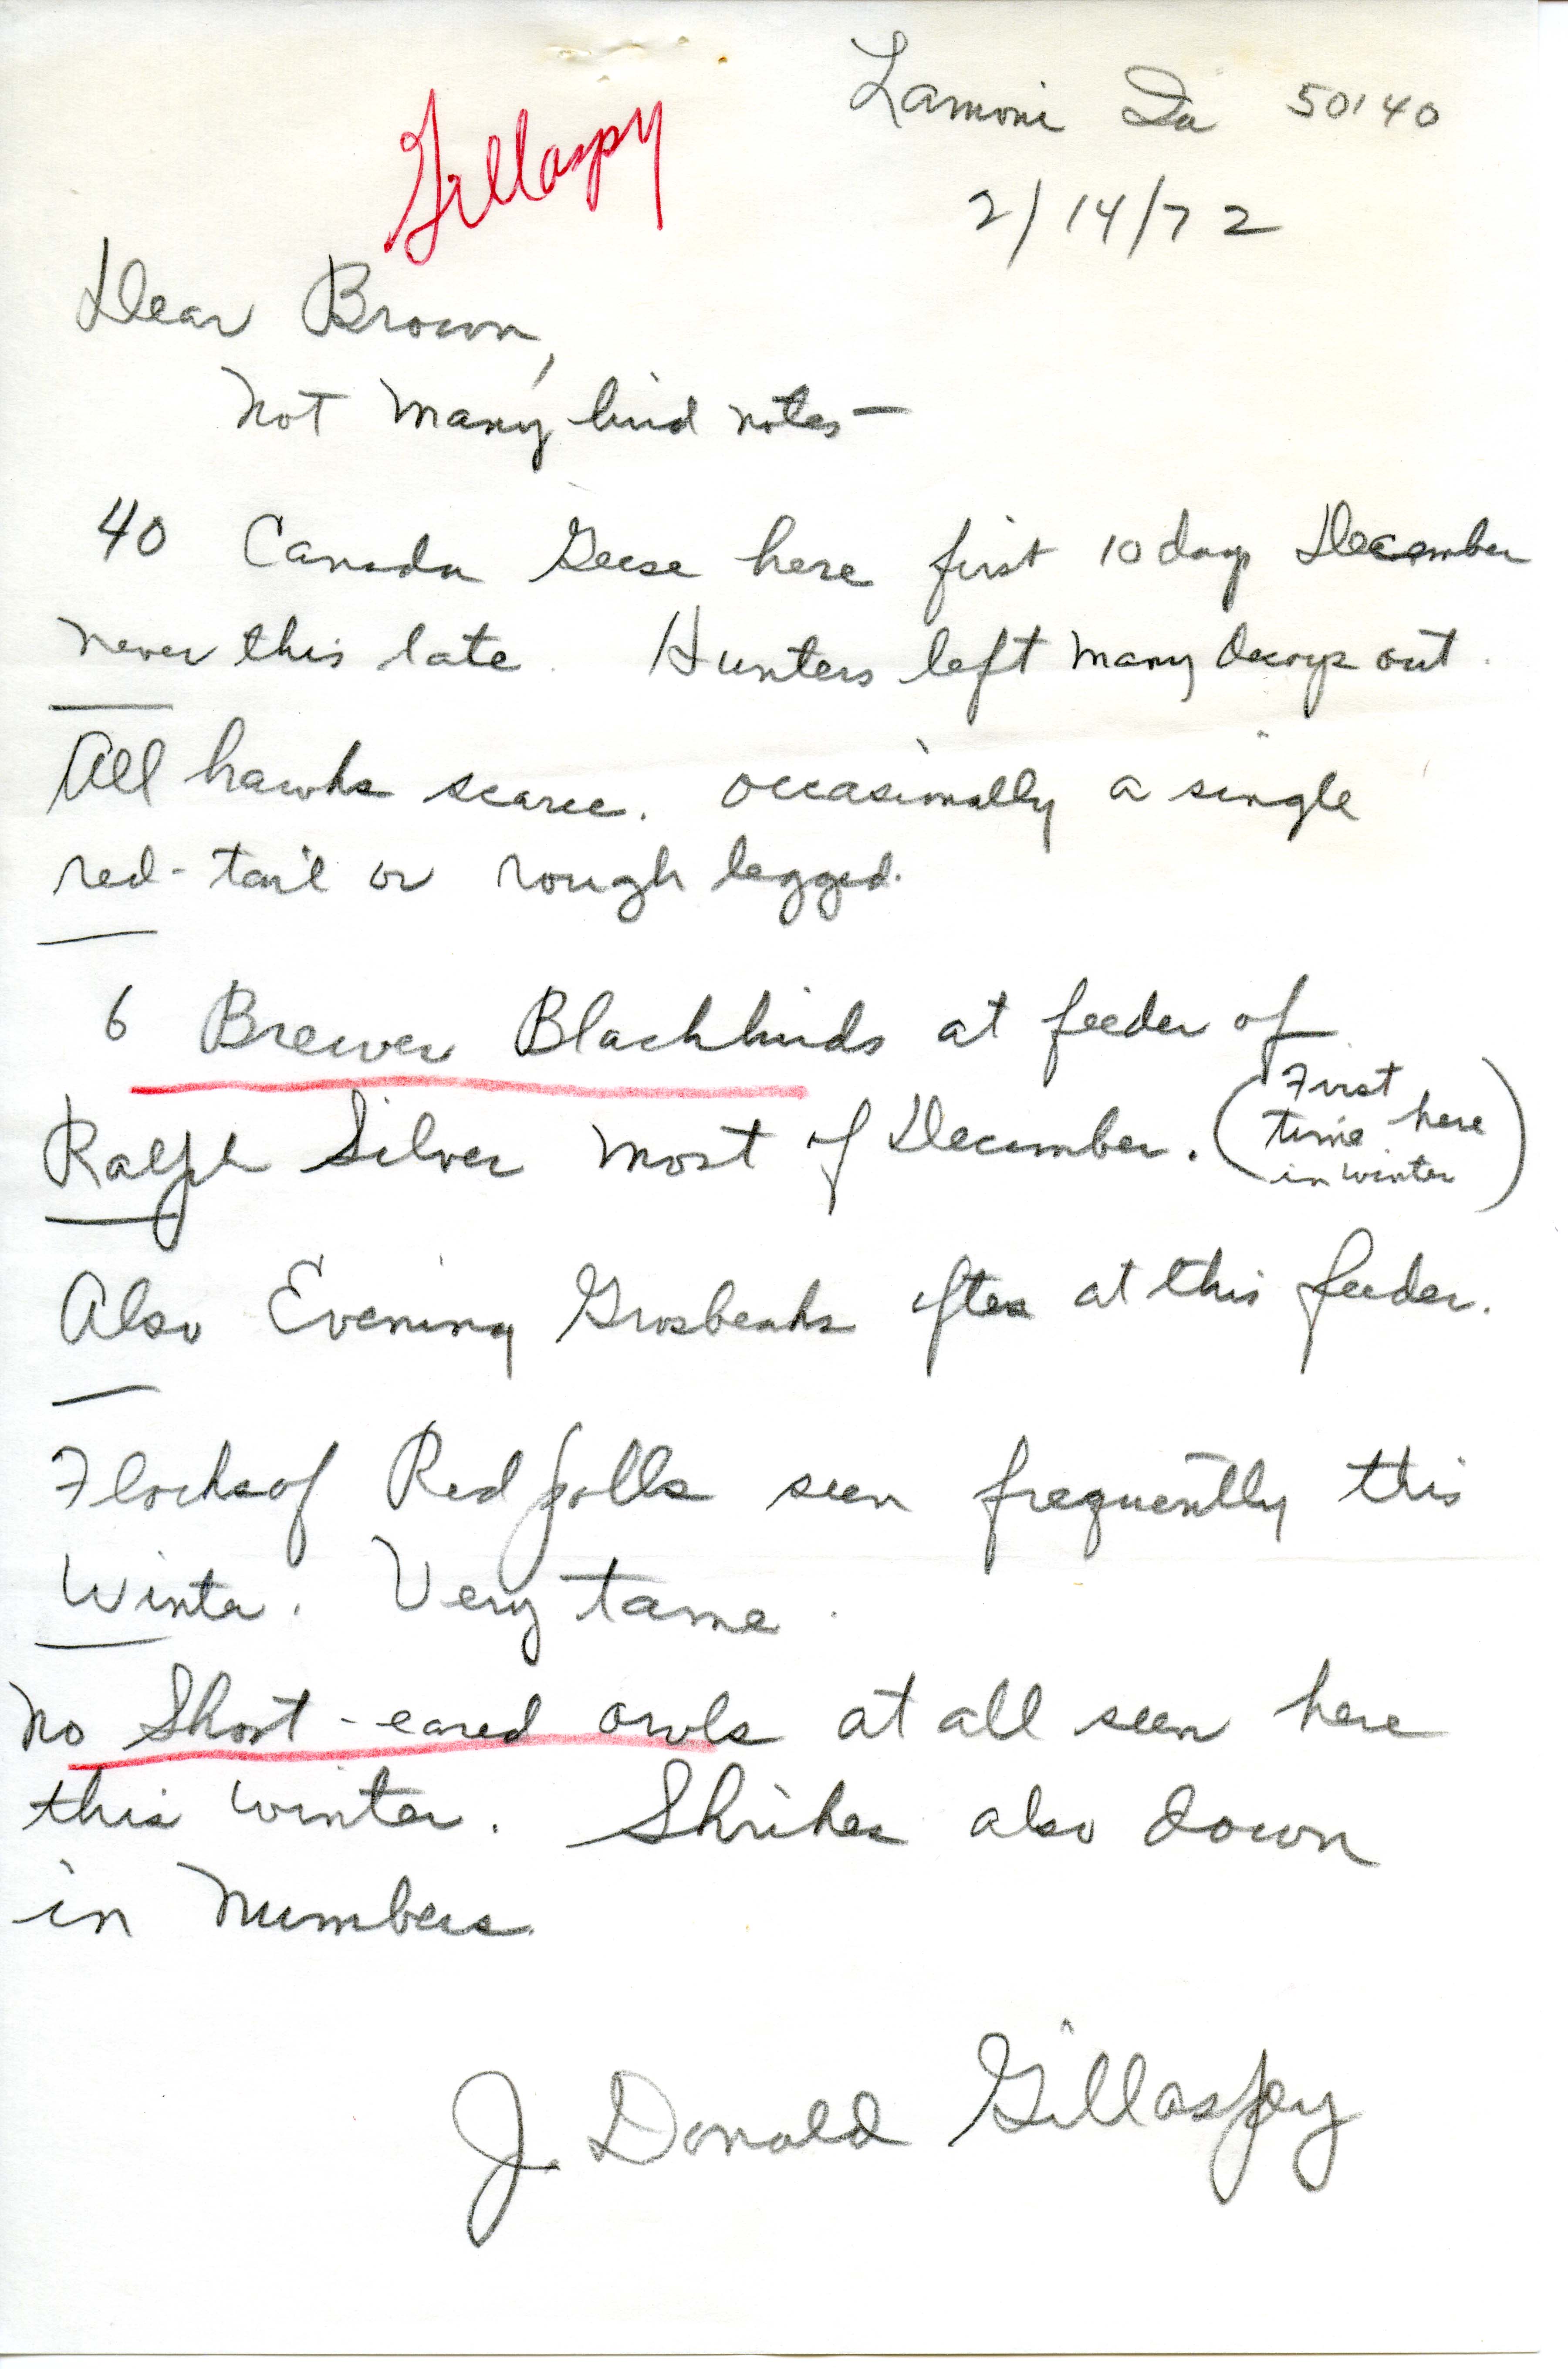 J. Donald Gillaspey letter to Woodward H. Brown regarding birds seen in Lamoni, Iowa, during winter 1971-1972, February 14, 1972